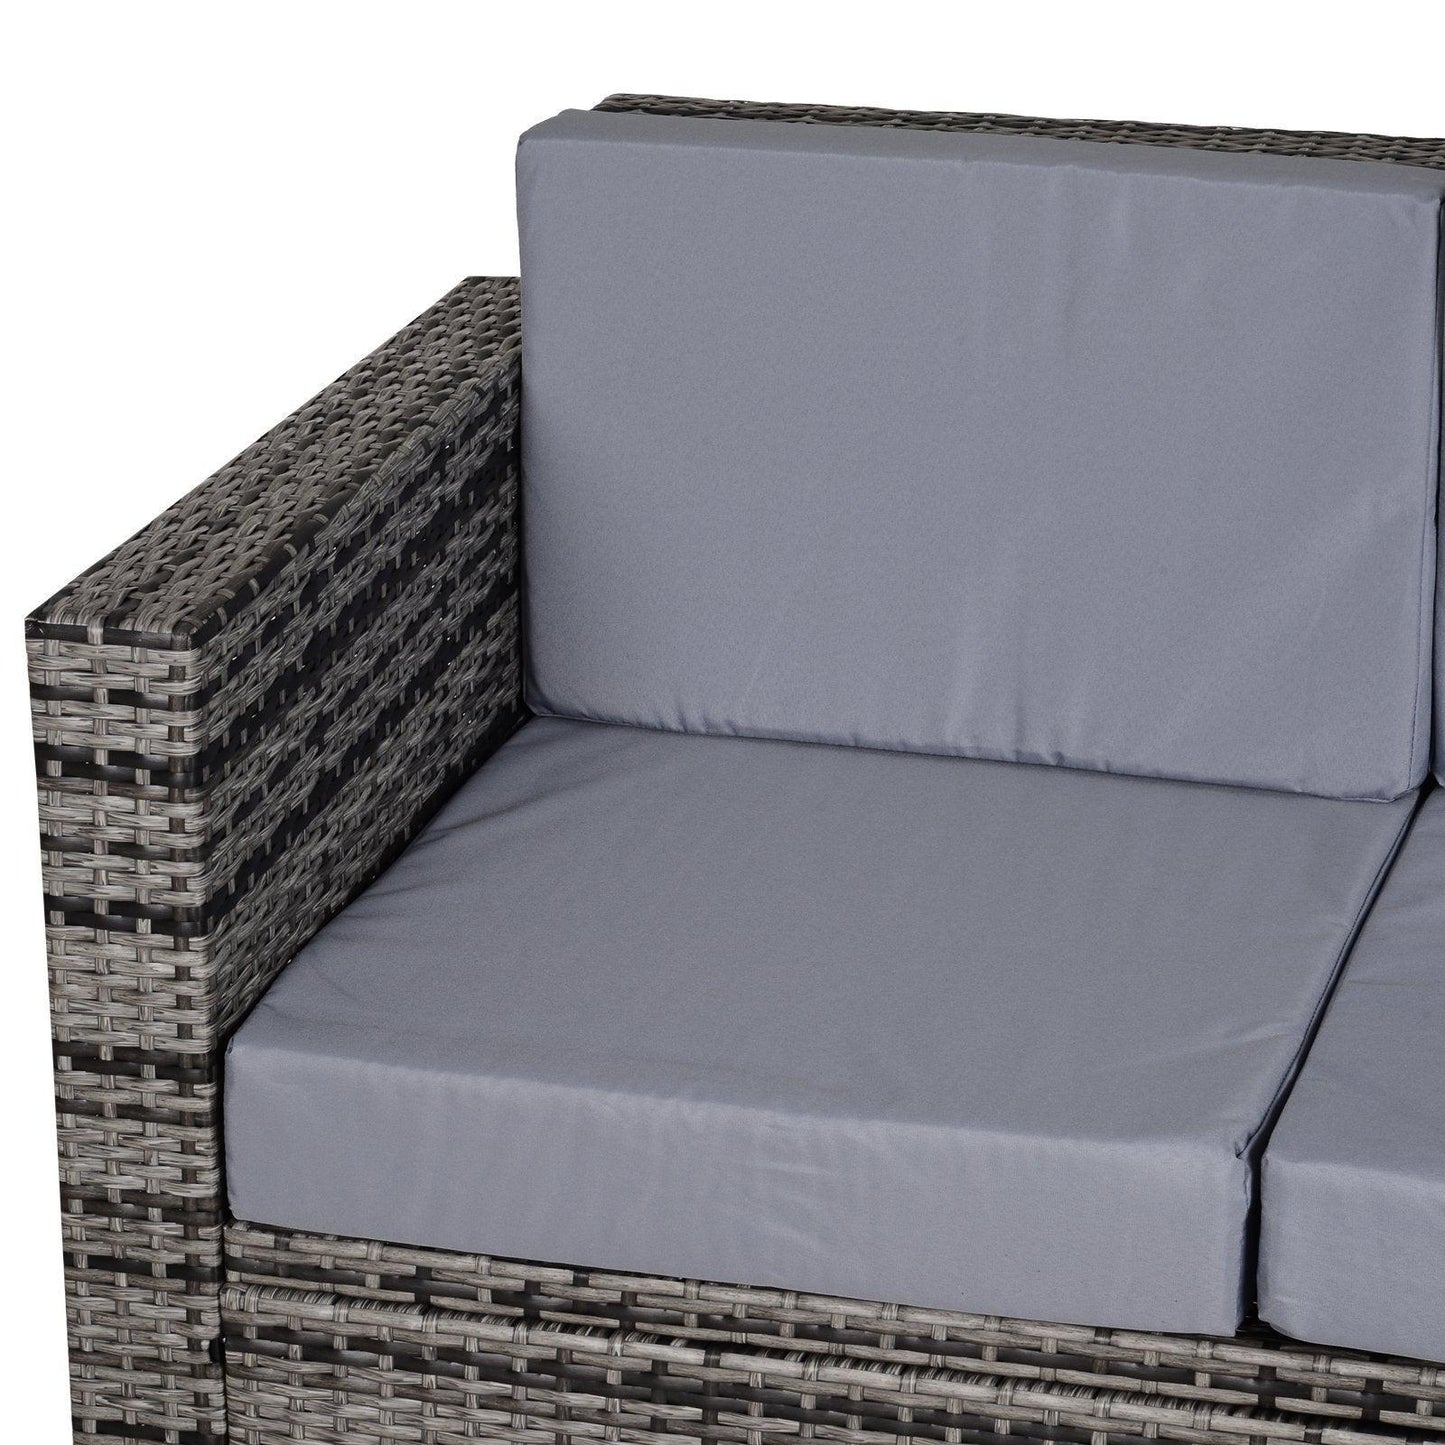 Outsunny 2-Seater Outdoor Rattan Sofa Chair - Grey - ALL4U RETAILER LTD